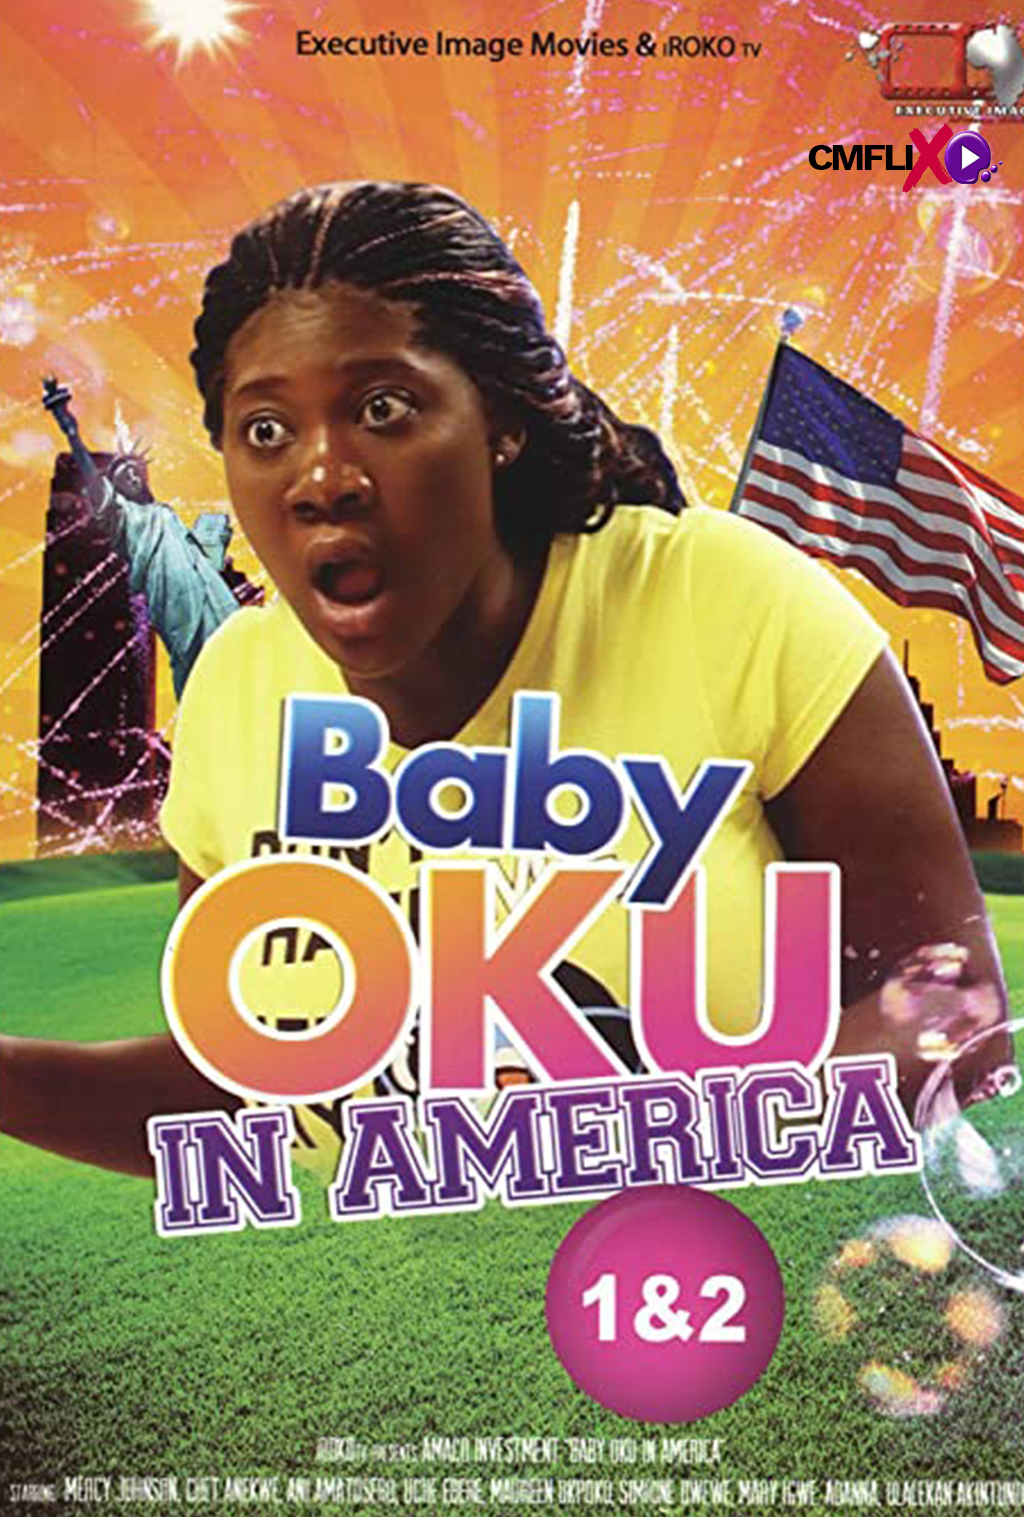 THE RETURN OF BABY OKU IN AMERICA PART 1